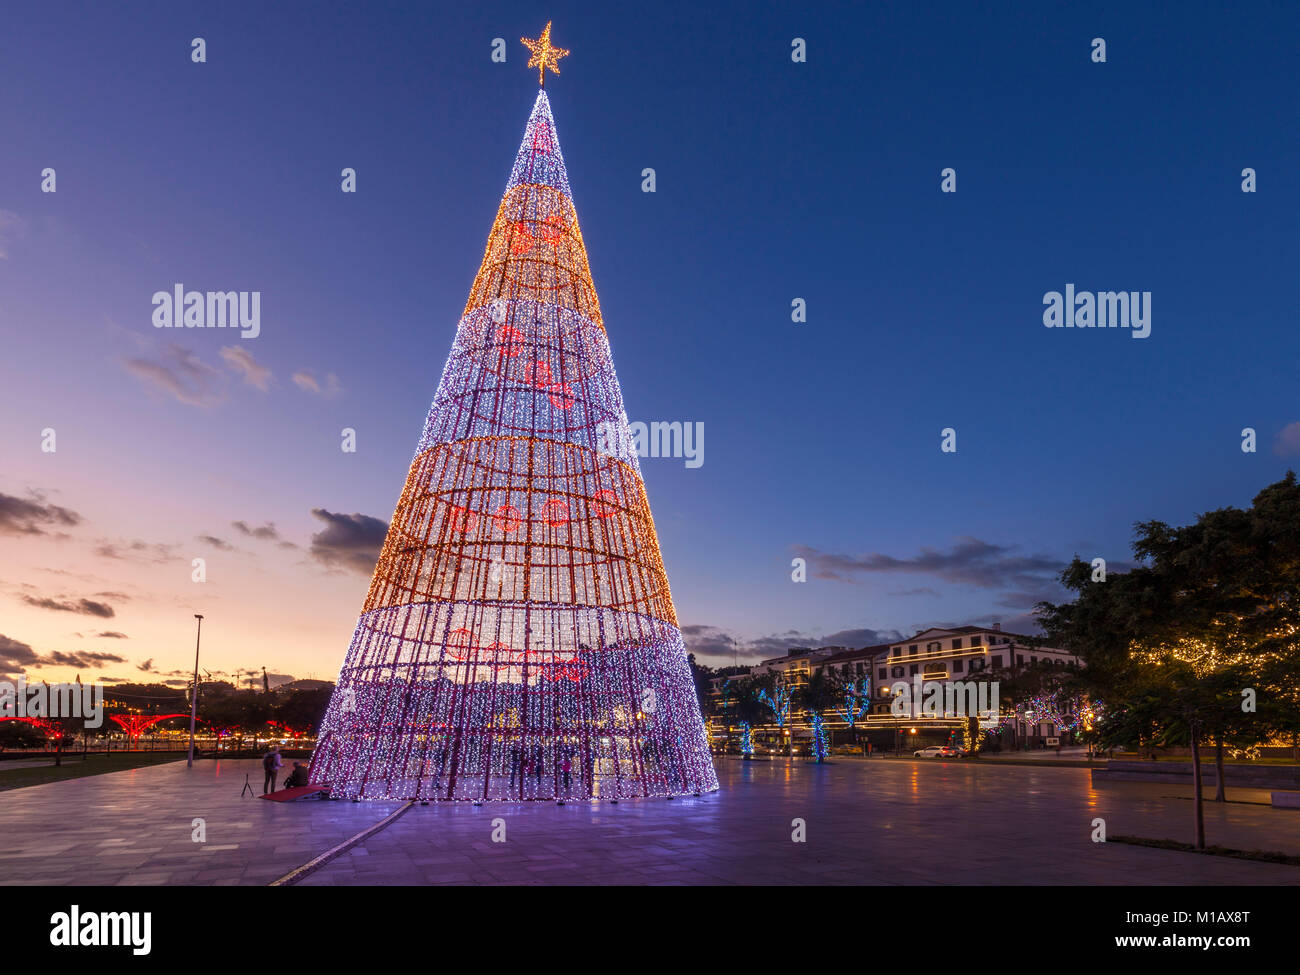 madeira funchal madeira weihnachtsbaum bestehend aus modernen LED-Leuchten an einem weihnachtsbaum an der Strandpromenade Funchal Madeira Portugal eu europa Stockfoto